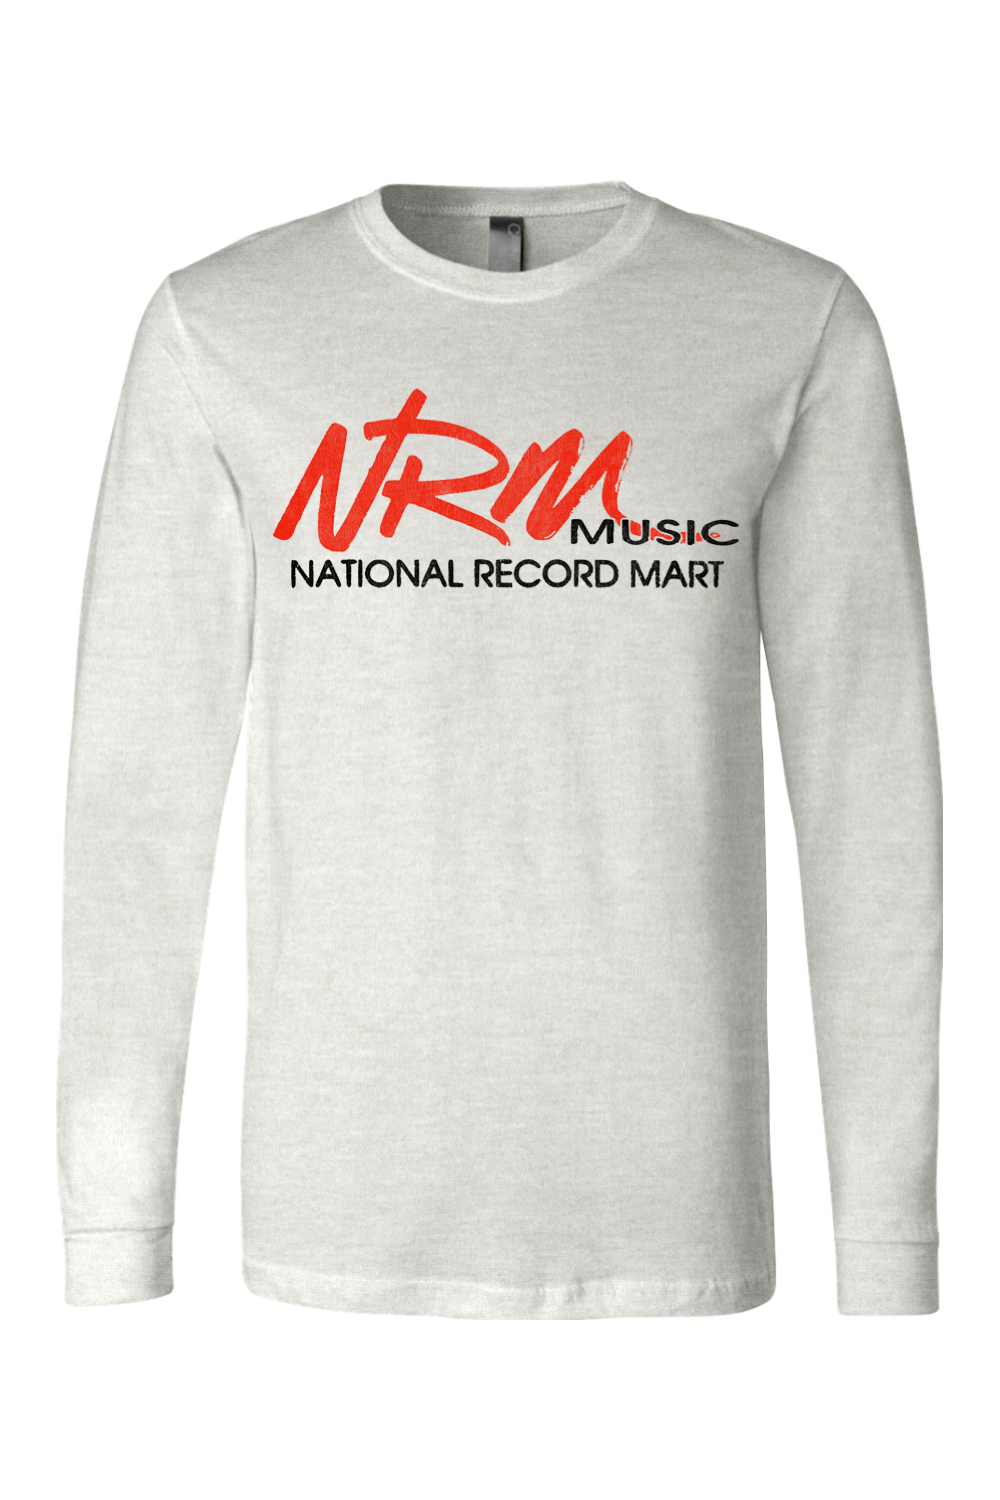 NRM - National Record Mart - Long Sleeve Tee - Yinzylvania